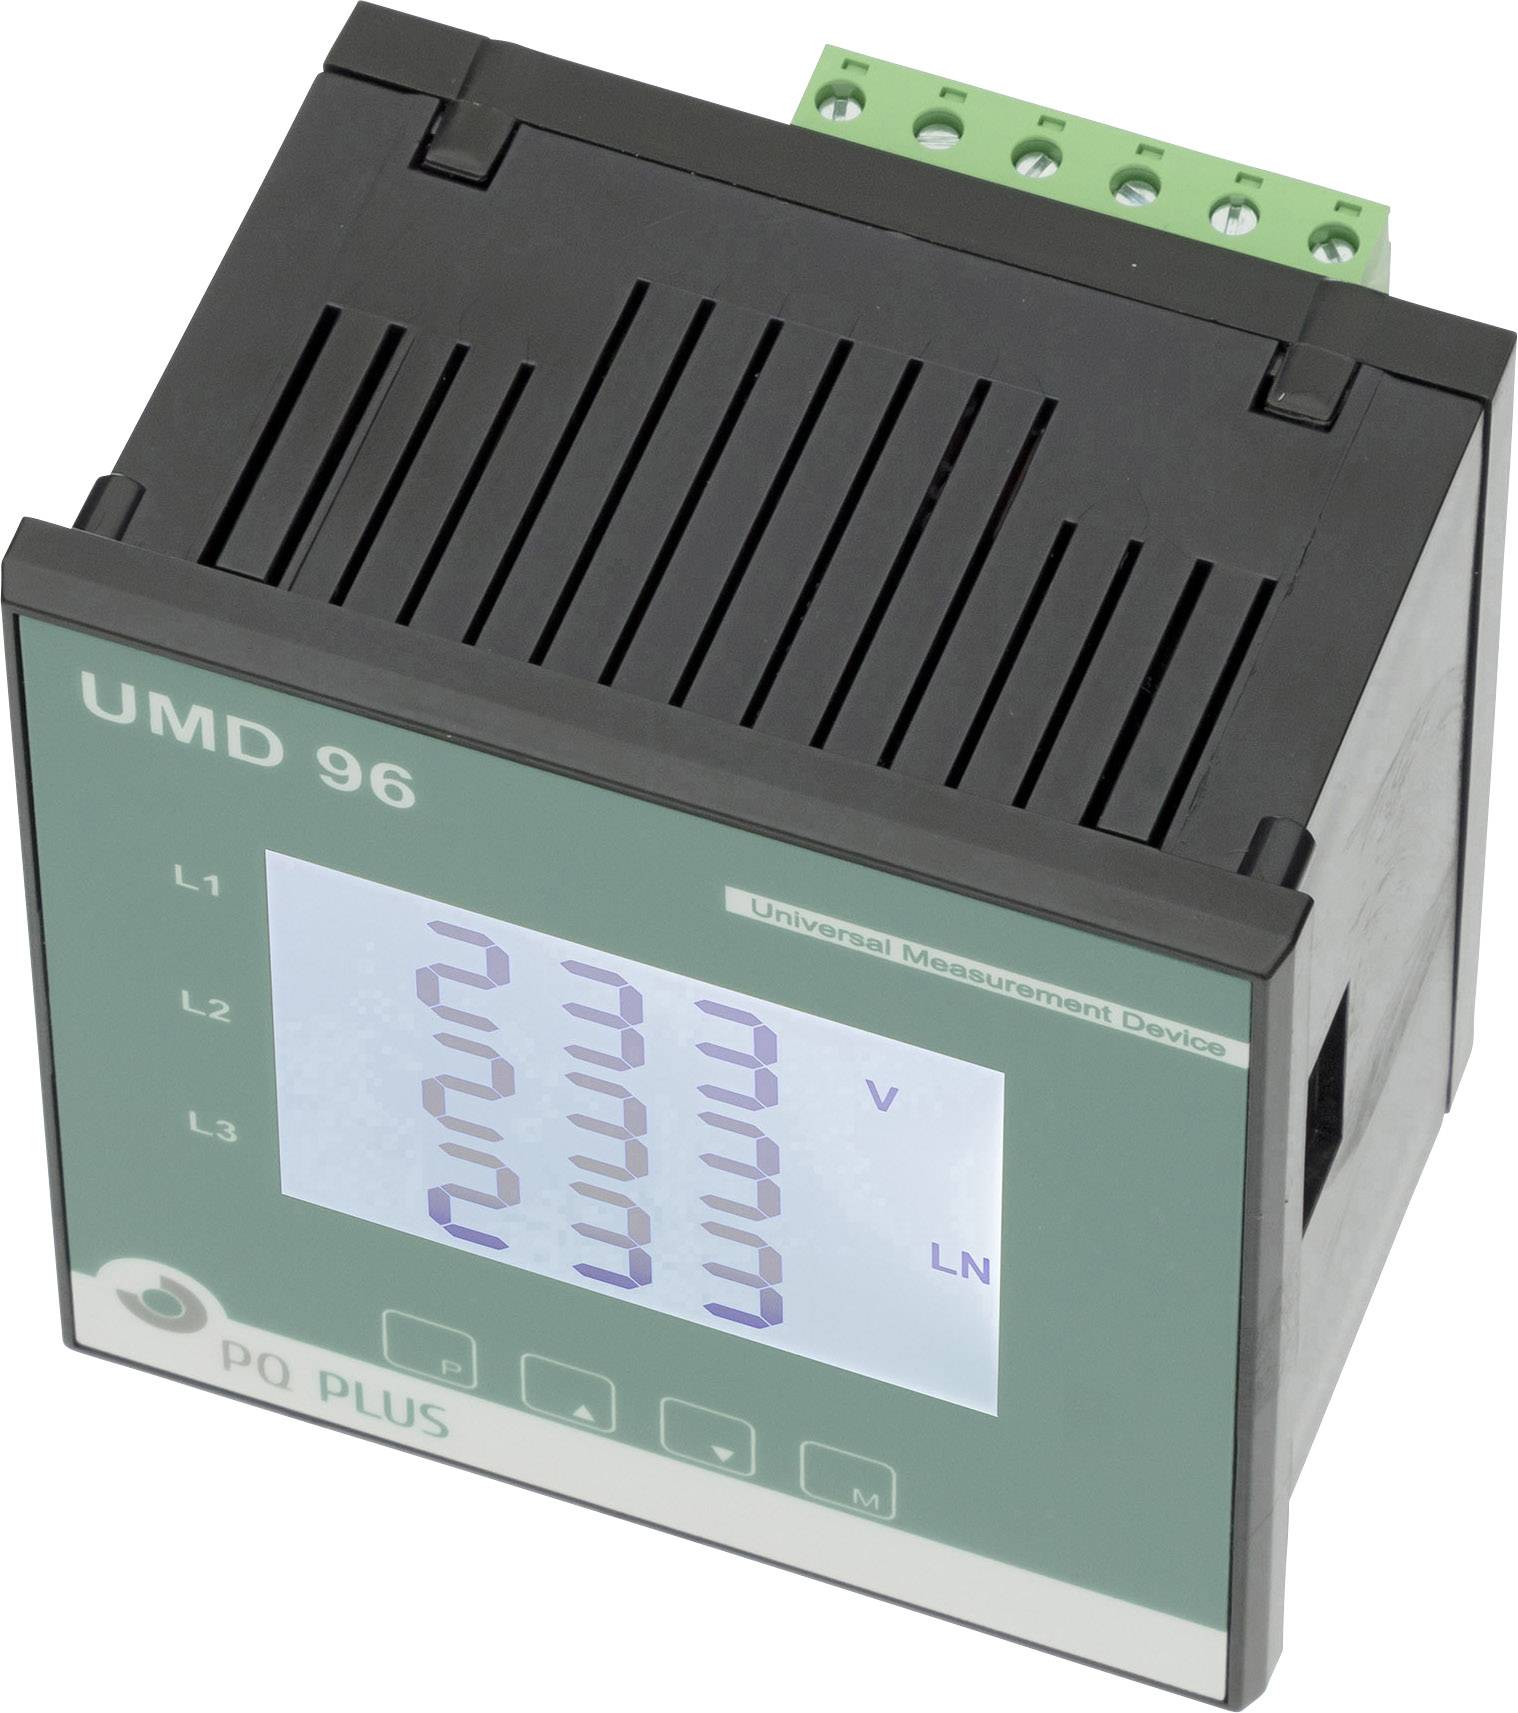 Pq Plus Umd 96 Universal Measuring Device Control Panel Umd Series